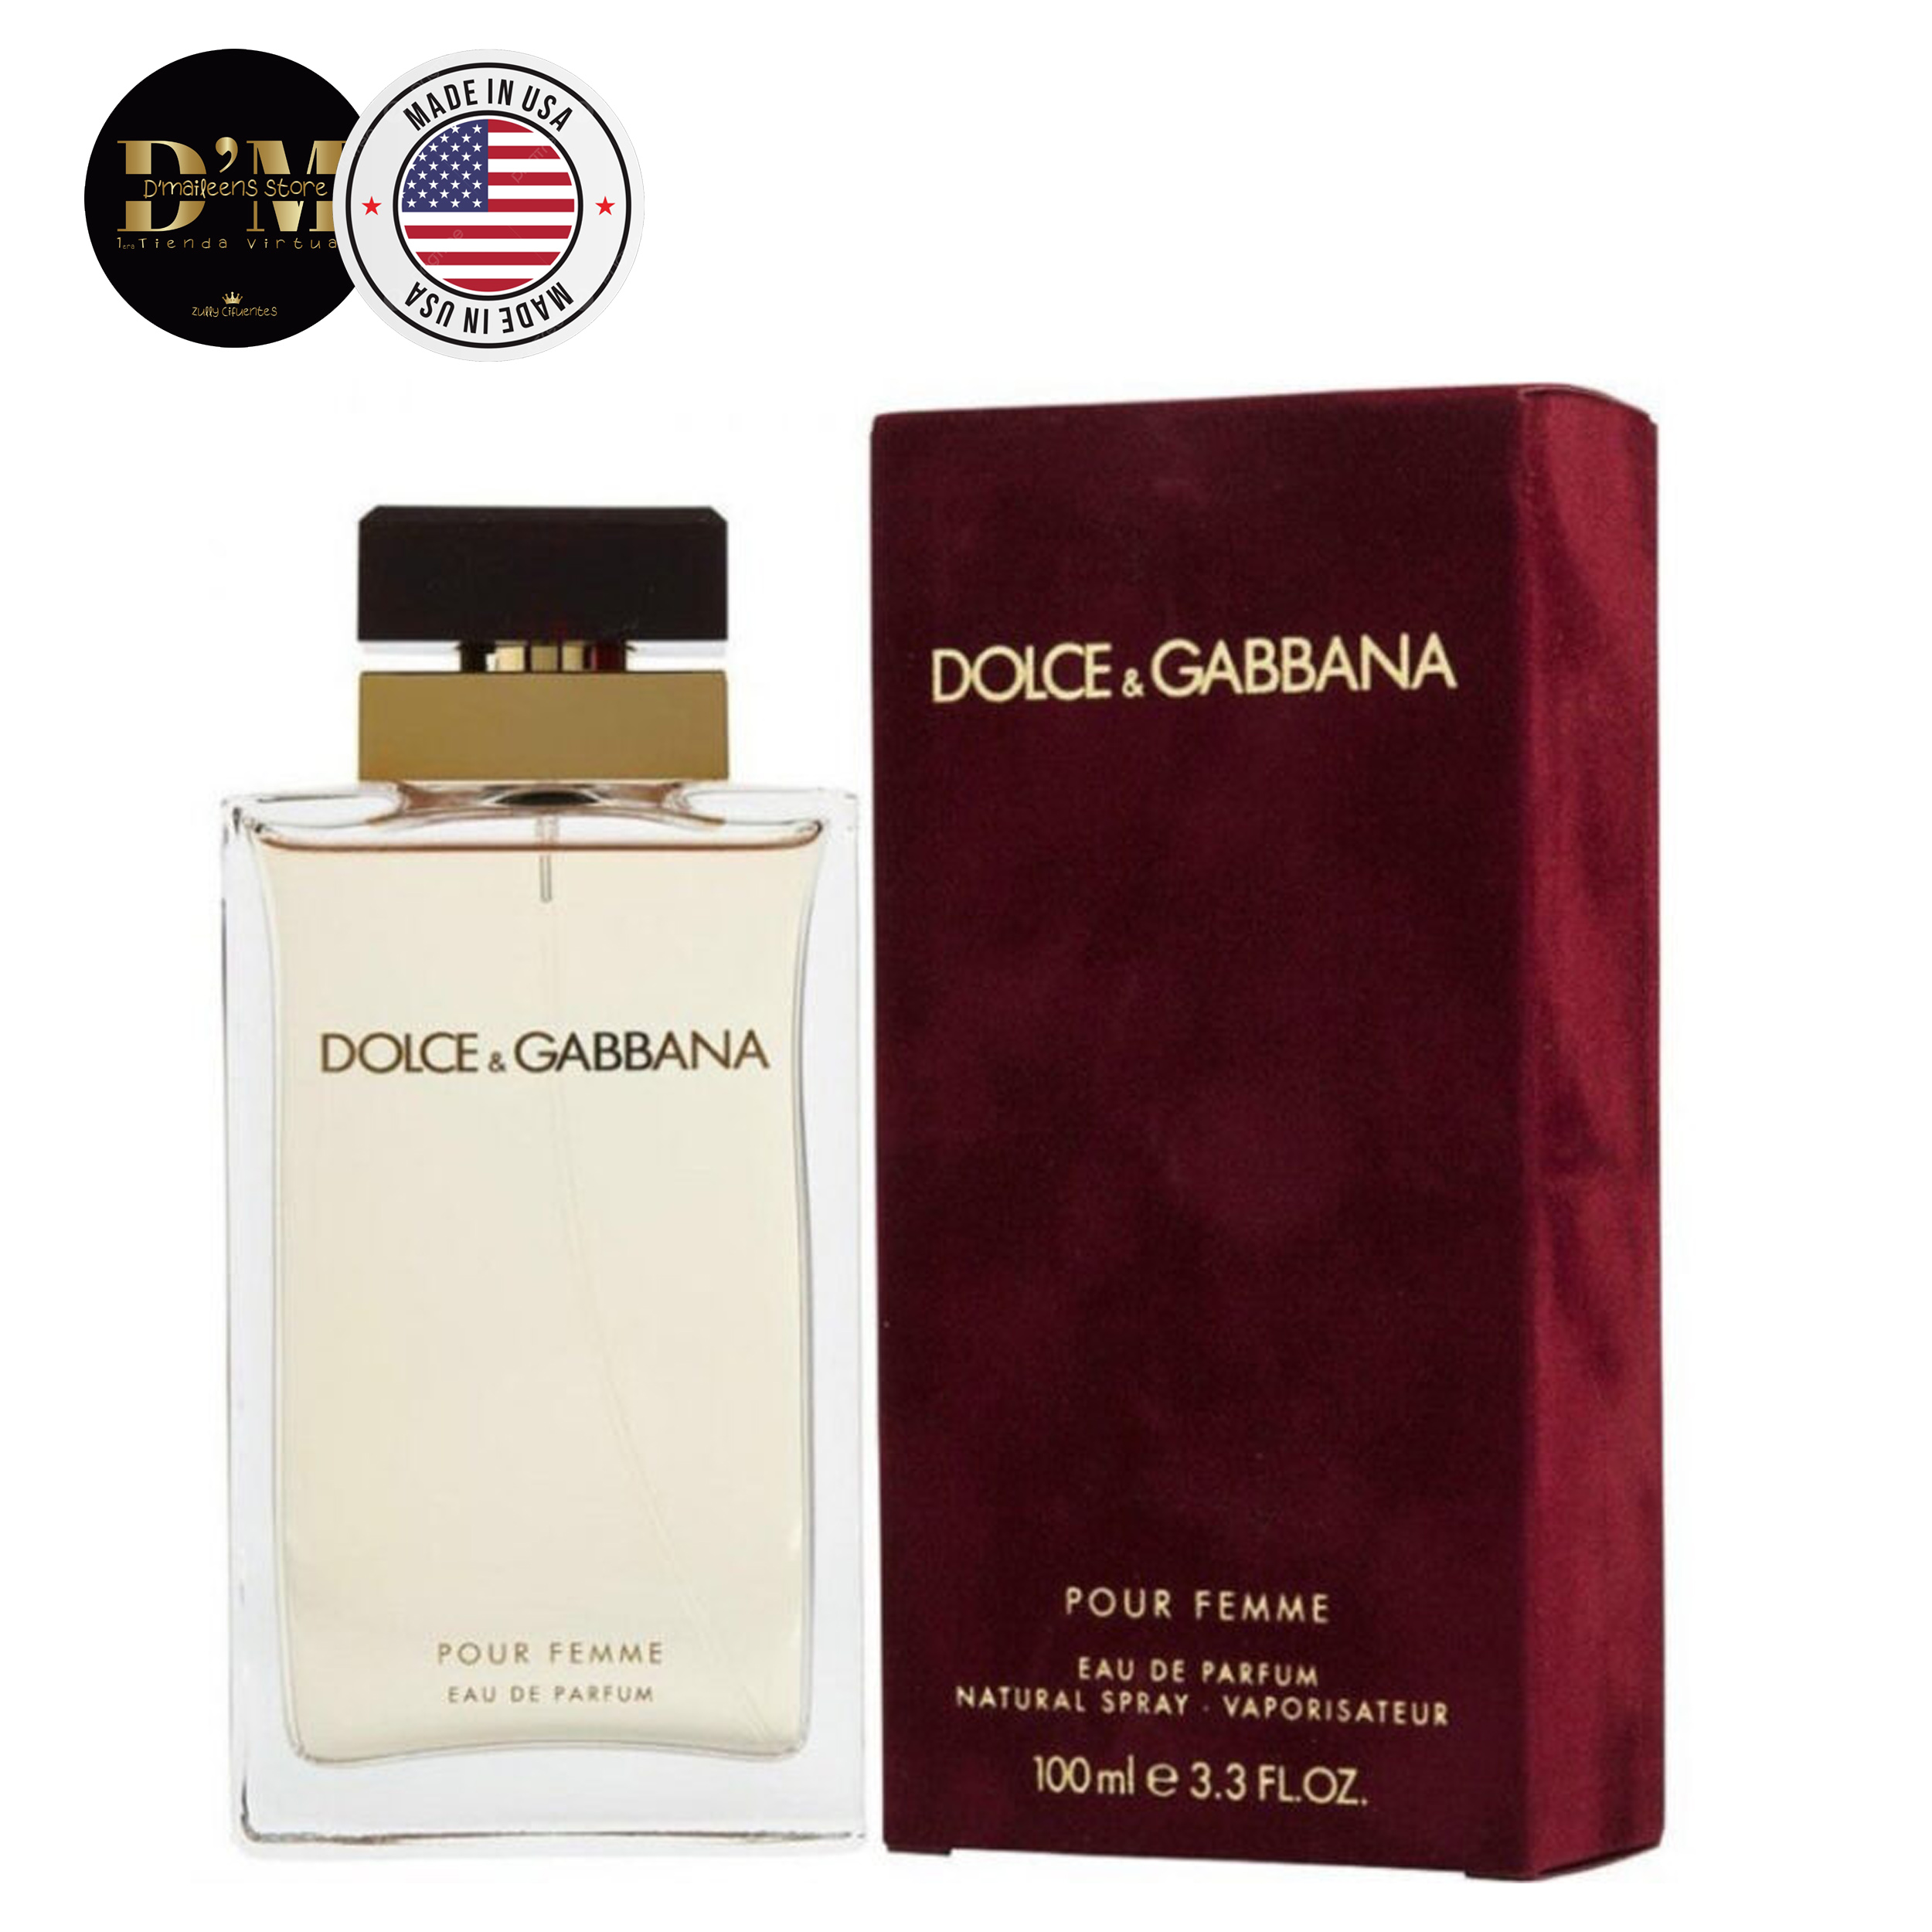 Perfume Dolce&Gabbana Pour Femme Dolce&Gabbana     (Replica Con Fragancia Importada)- Mujer